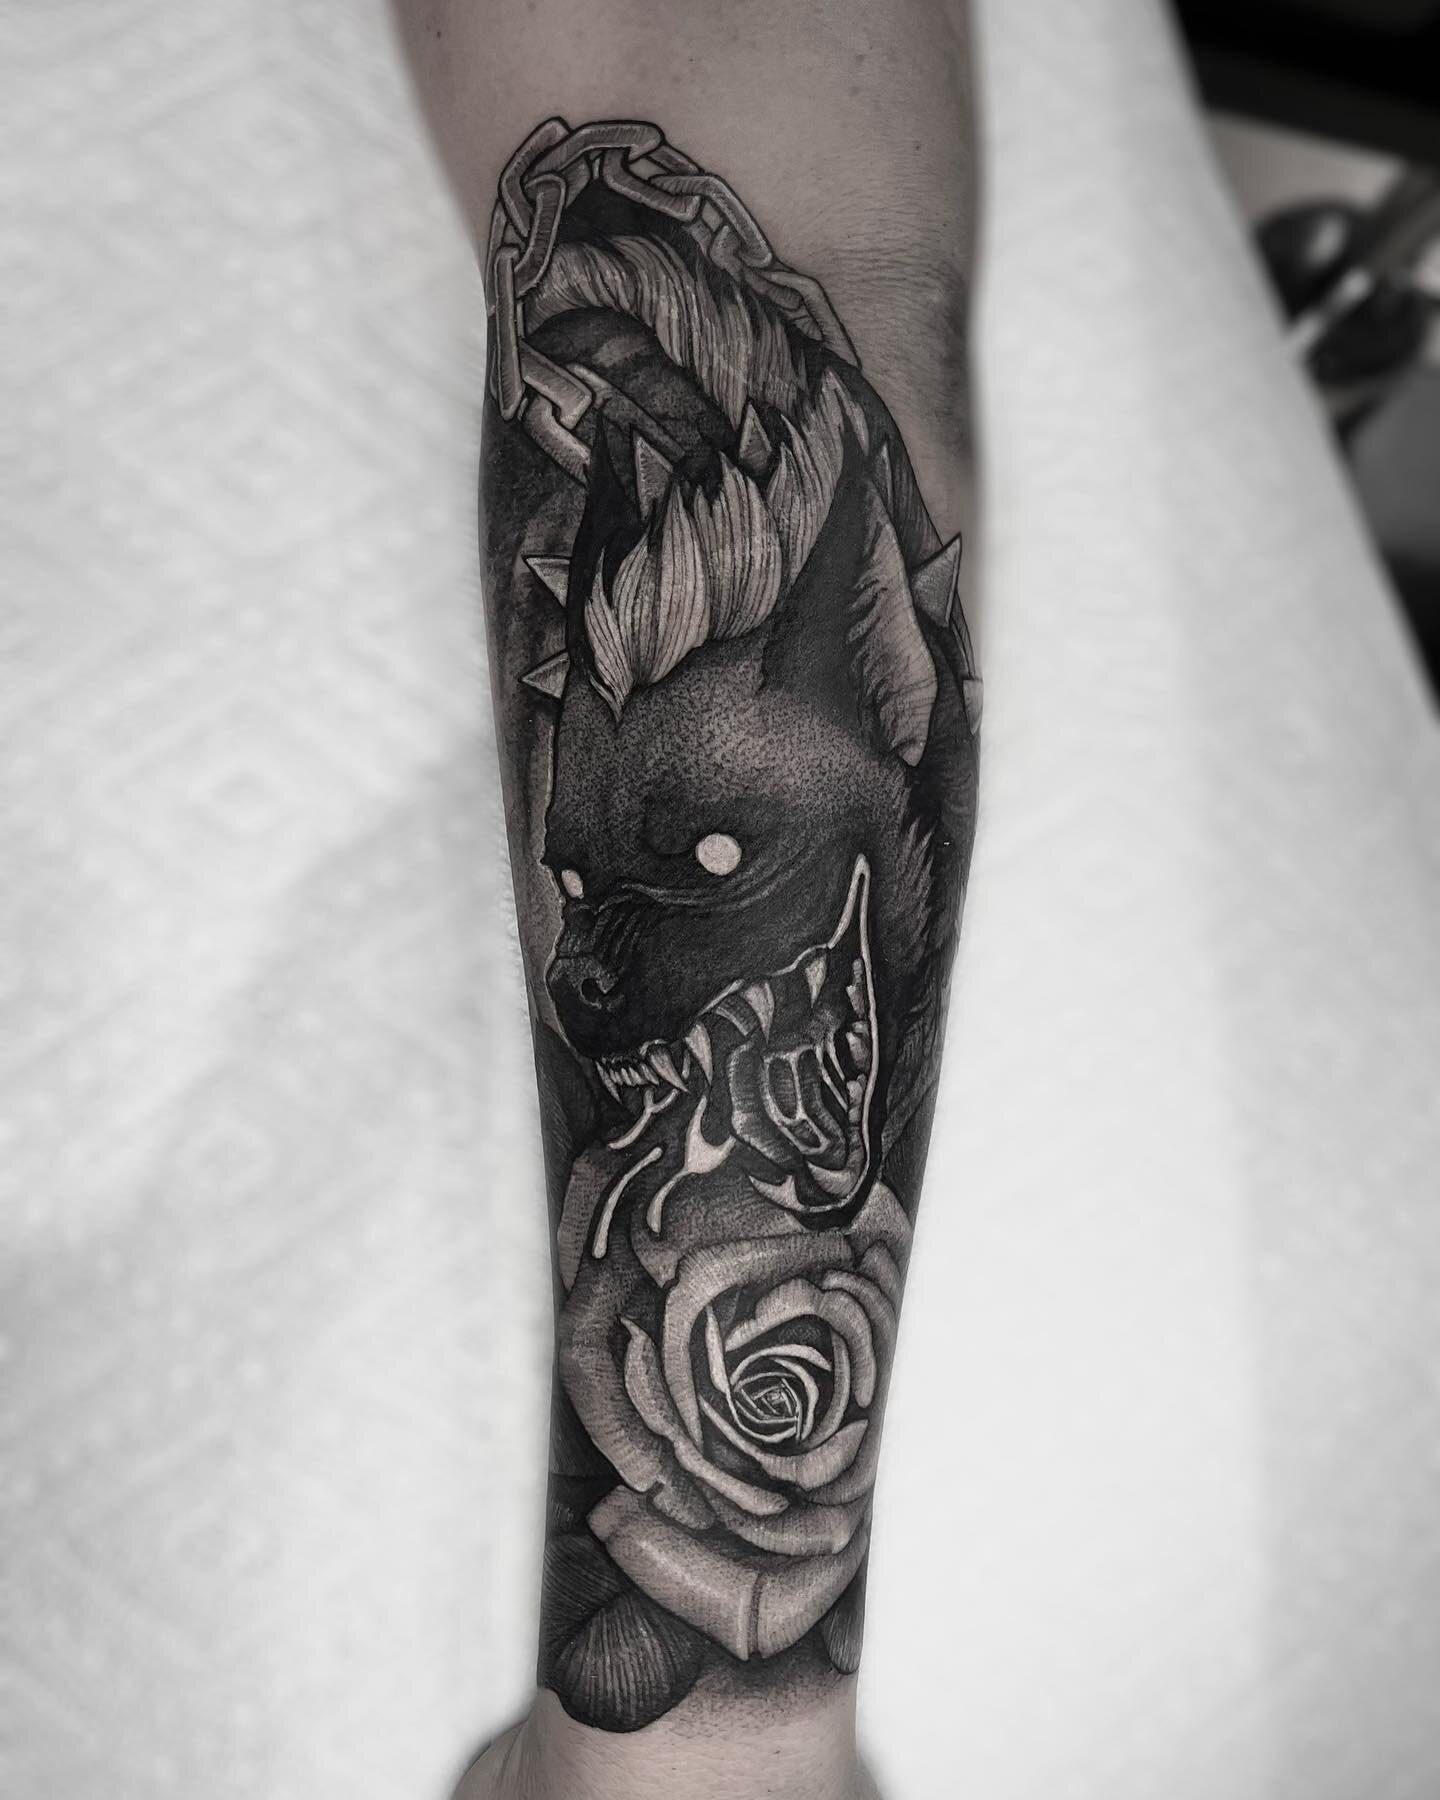 Bud or Lou? ✨ One of Harley&rsquo;s hyenas! Swipe to see the start of HQ herself 🖤 
✖️ Done at @sharktooth_tattoo ✖️
.
.
.
@industryinks
@hivecaps 
@empireinks 
@goodguysupply 
.
.
.
.
.
.
.
.
.
.
.
.
.
.
#tattoo #tattoos #tattooartist #tattooed #ta